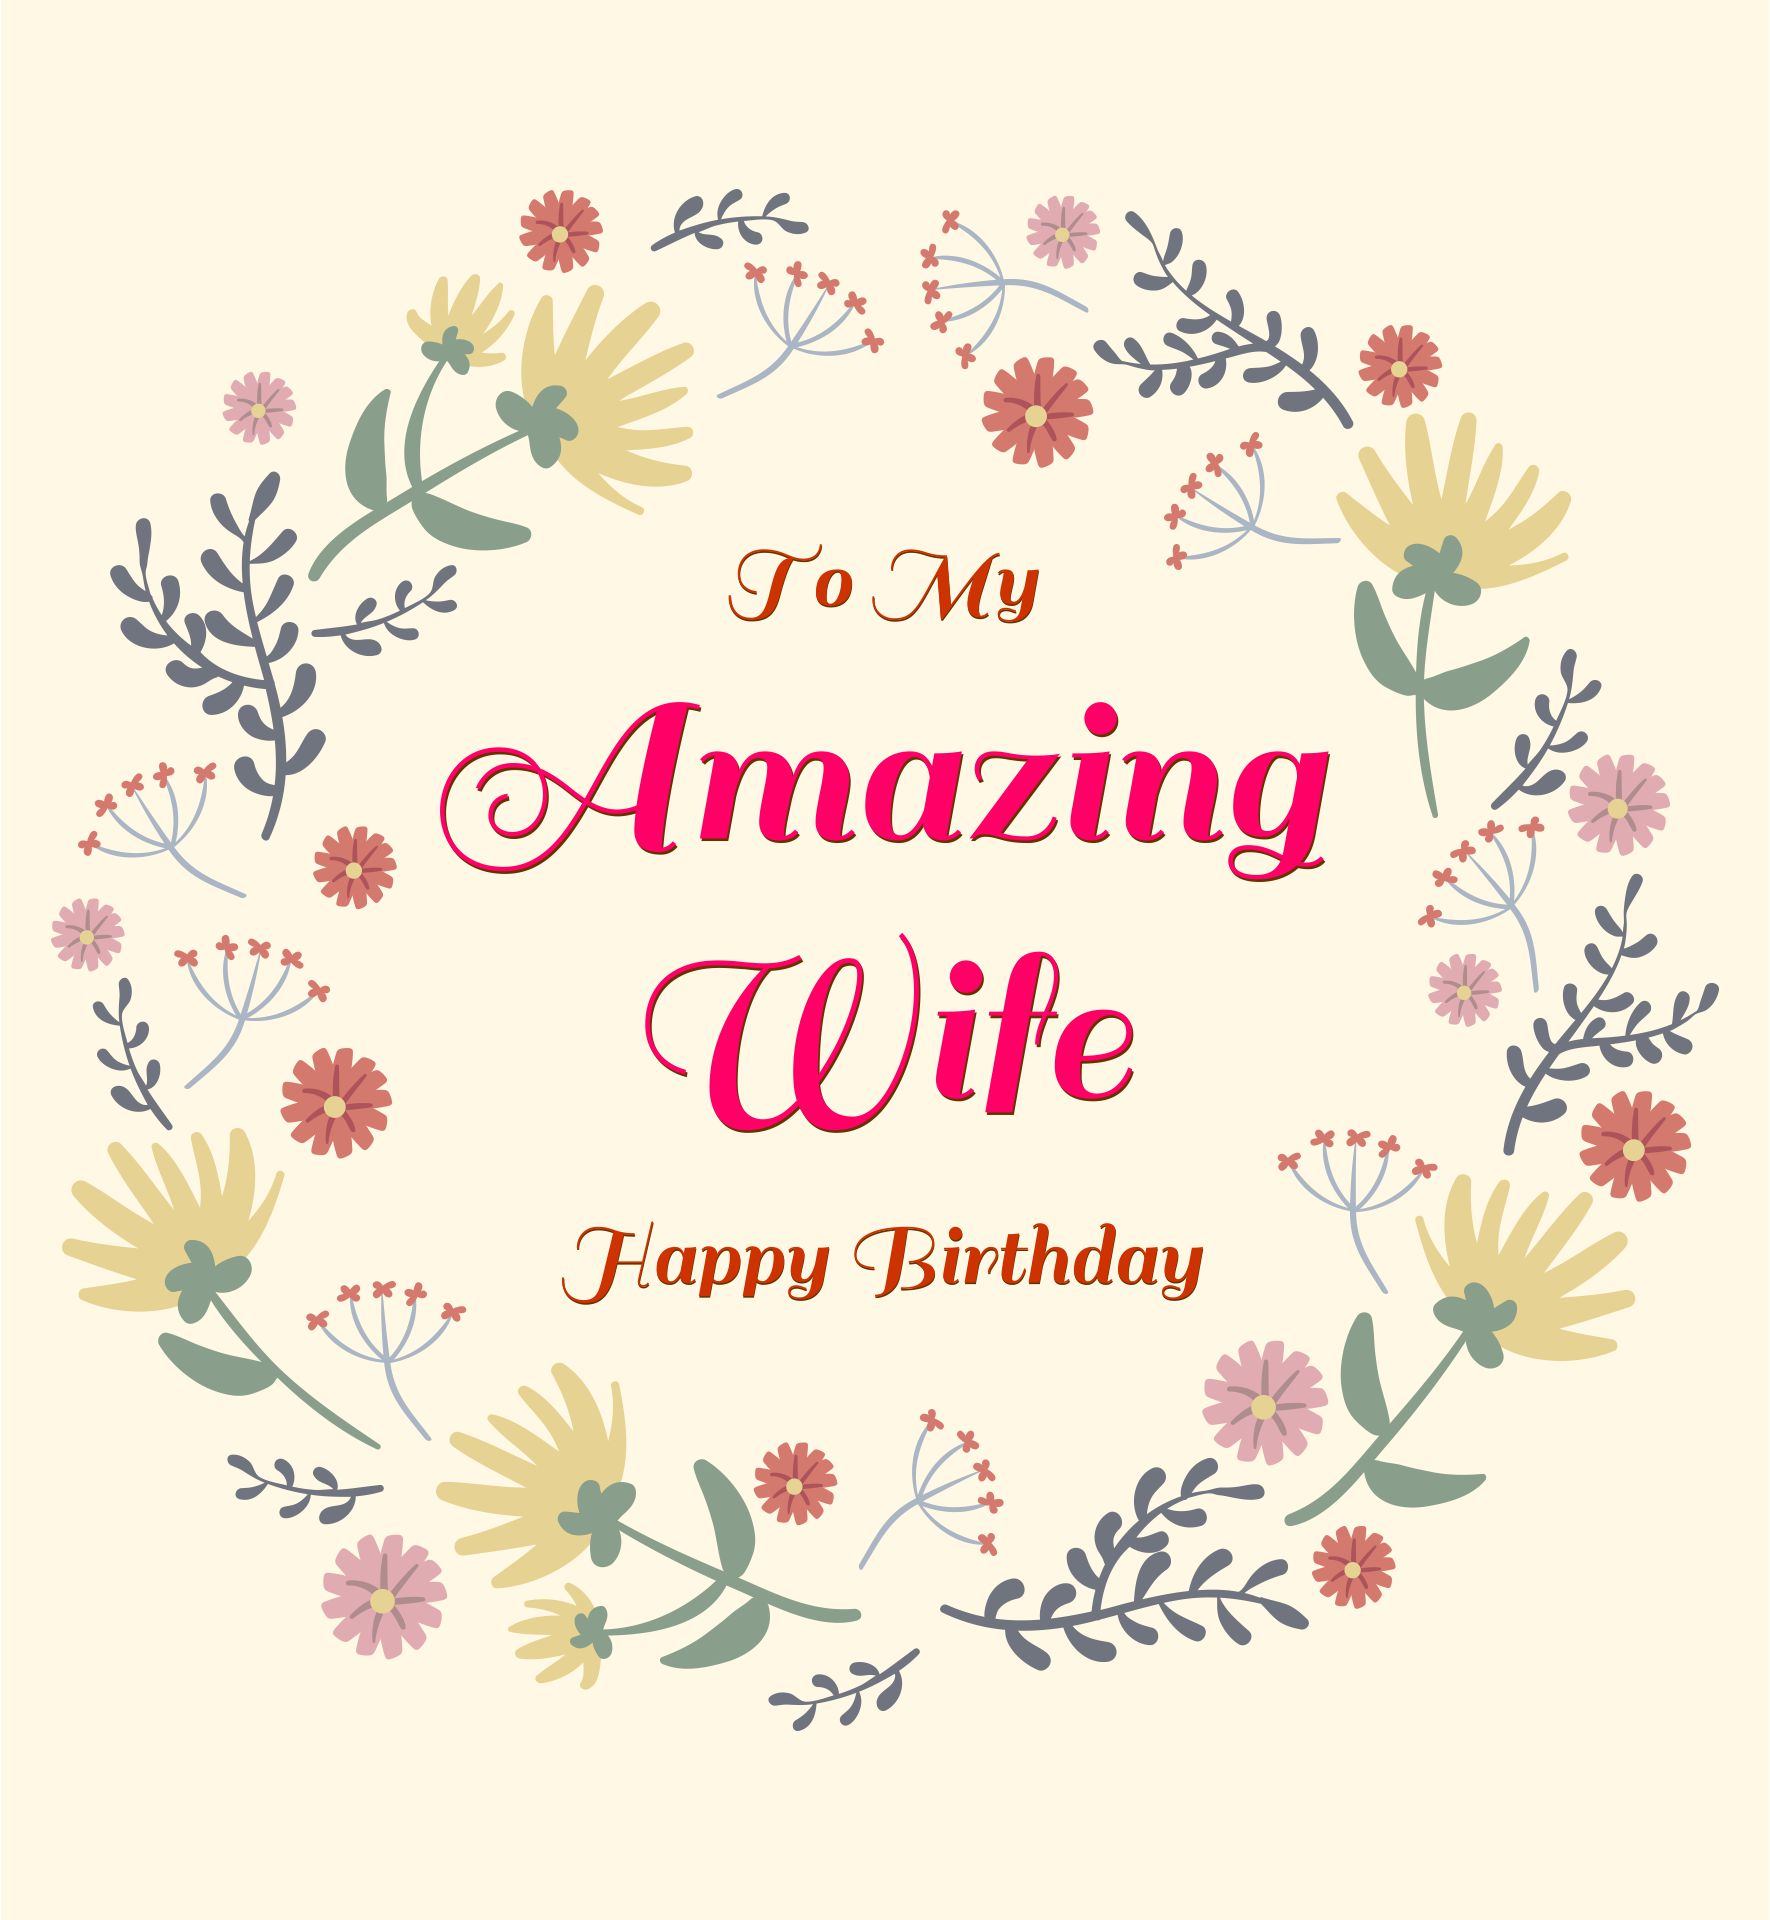 Free Printable Birthday Cards Wife